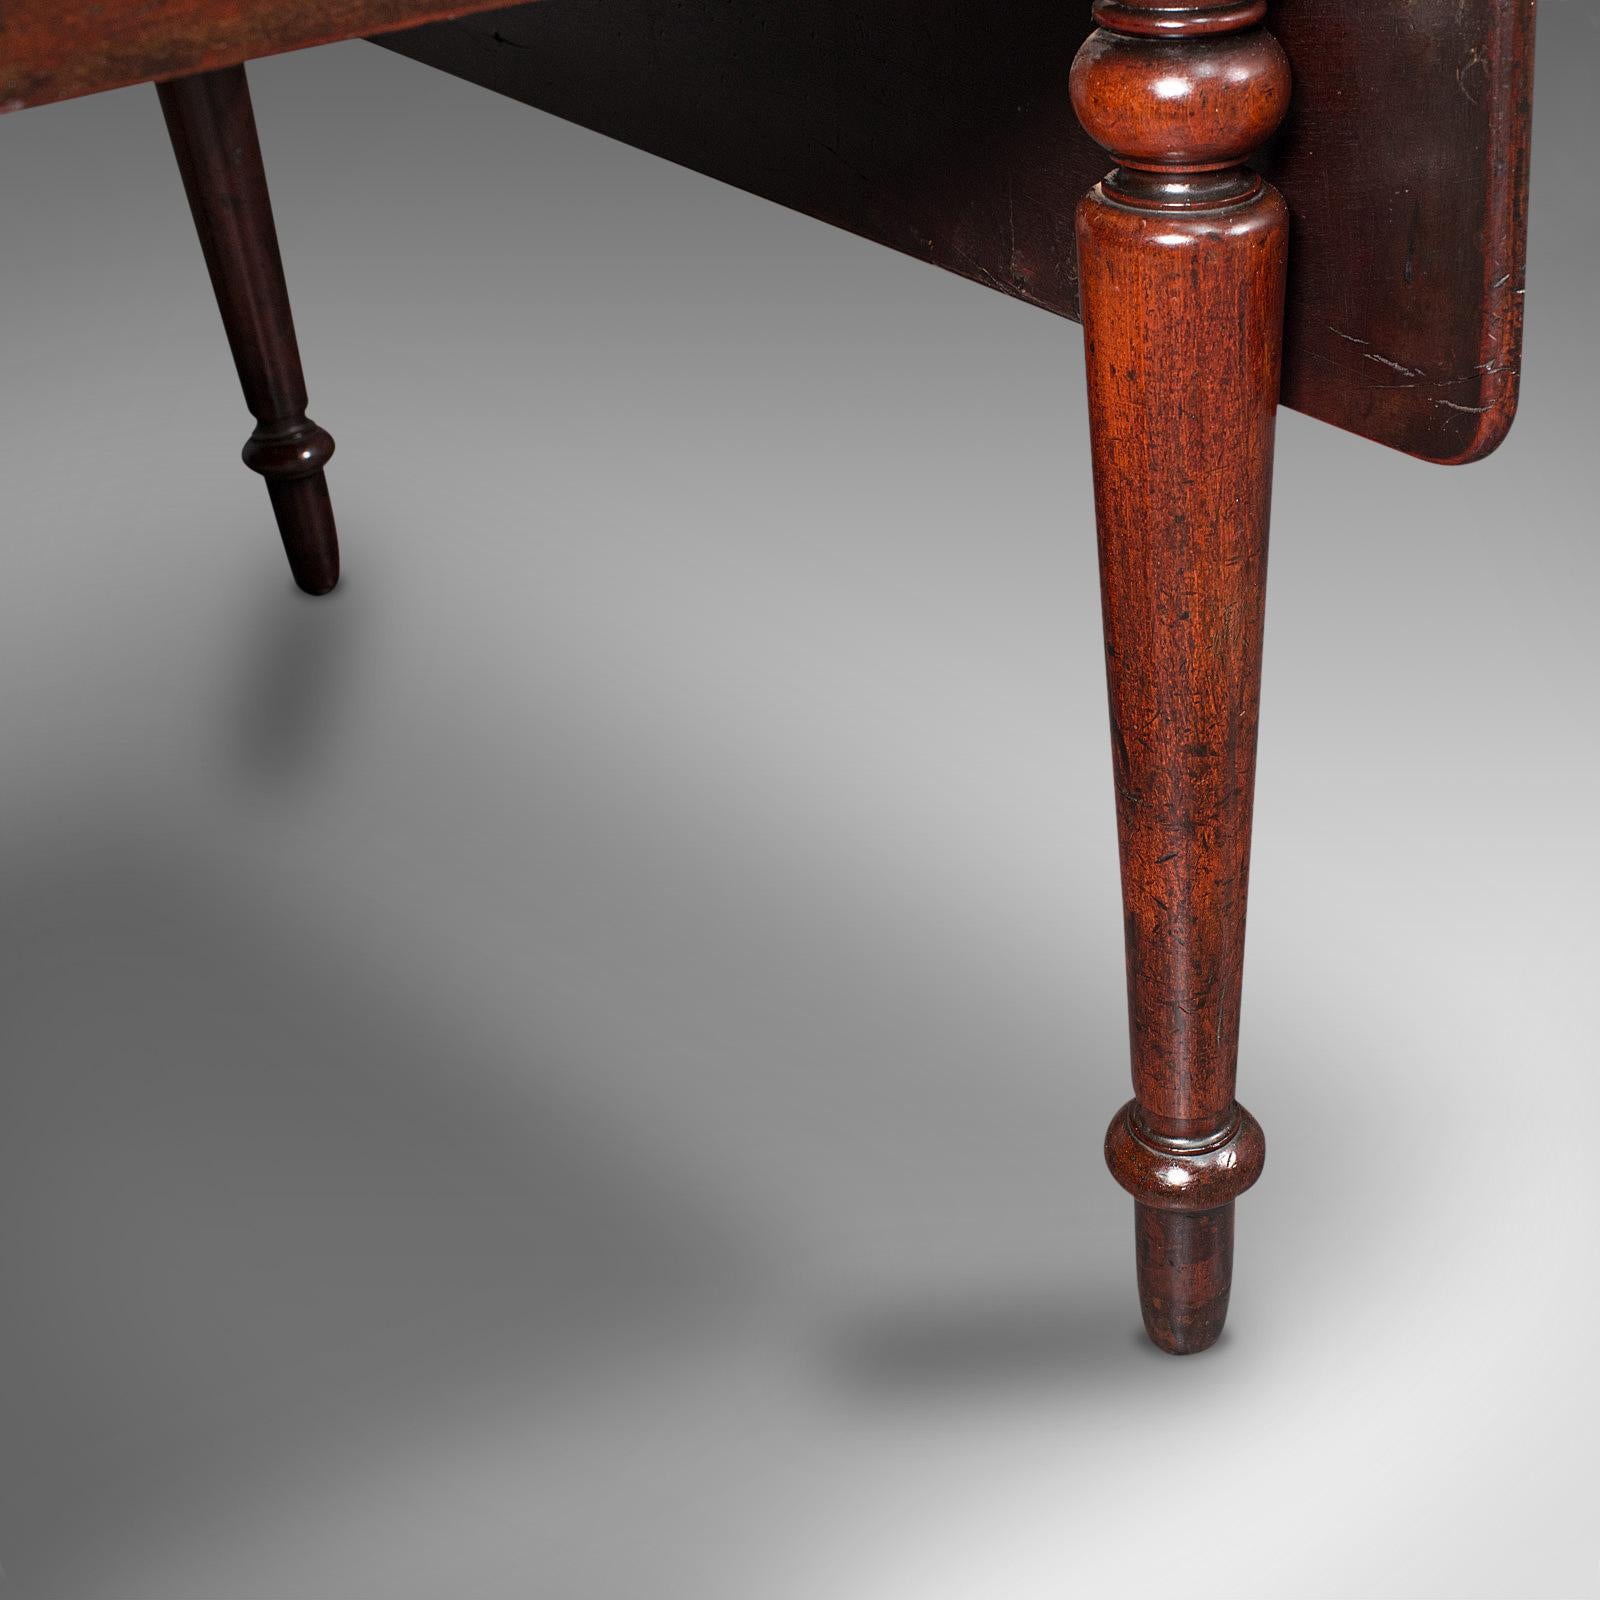 Antique Pembroke Table, English, Mahogany, Extending, Dining, Regency, C.1820 For Sale 6